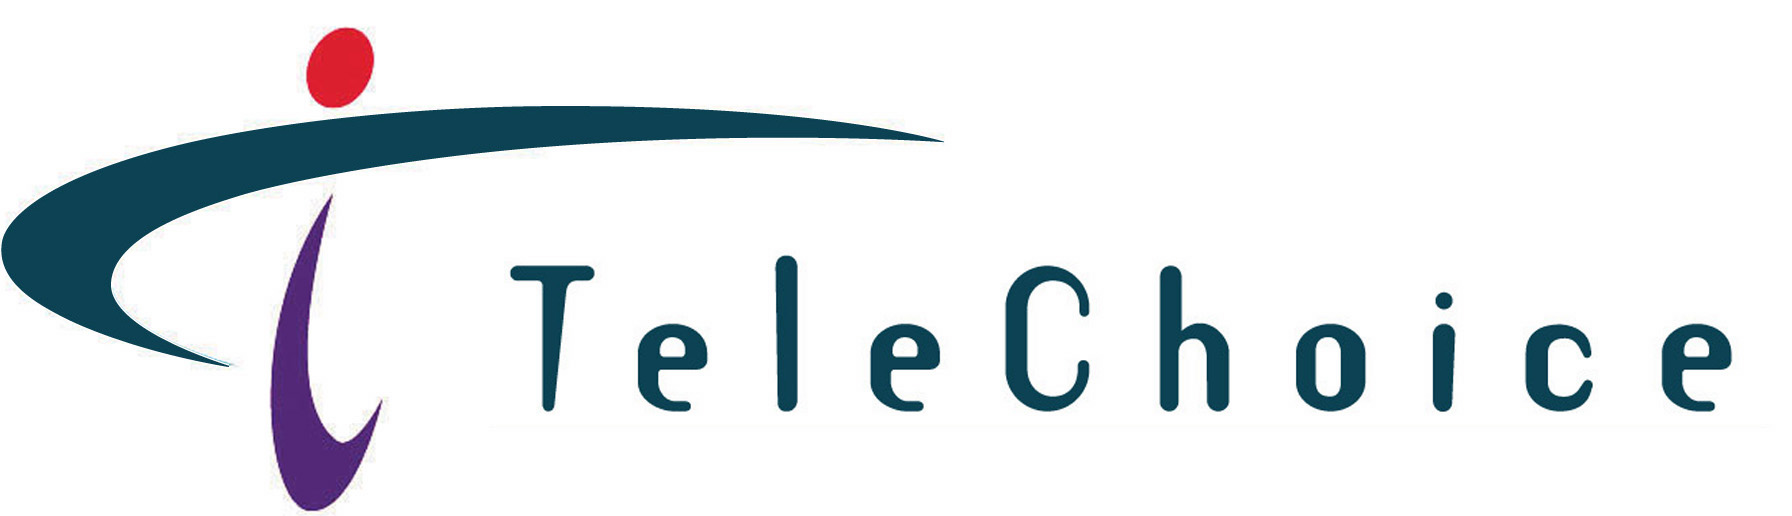 Telechoice International Limited logo